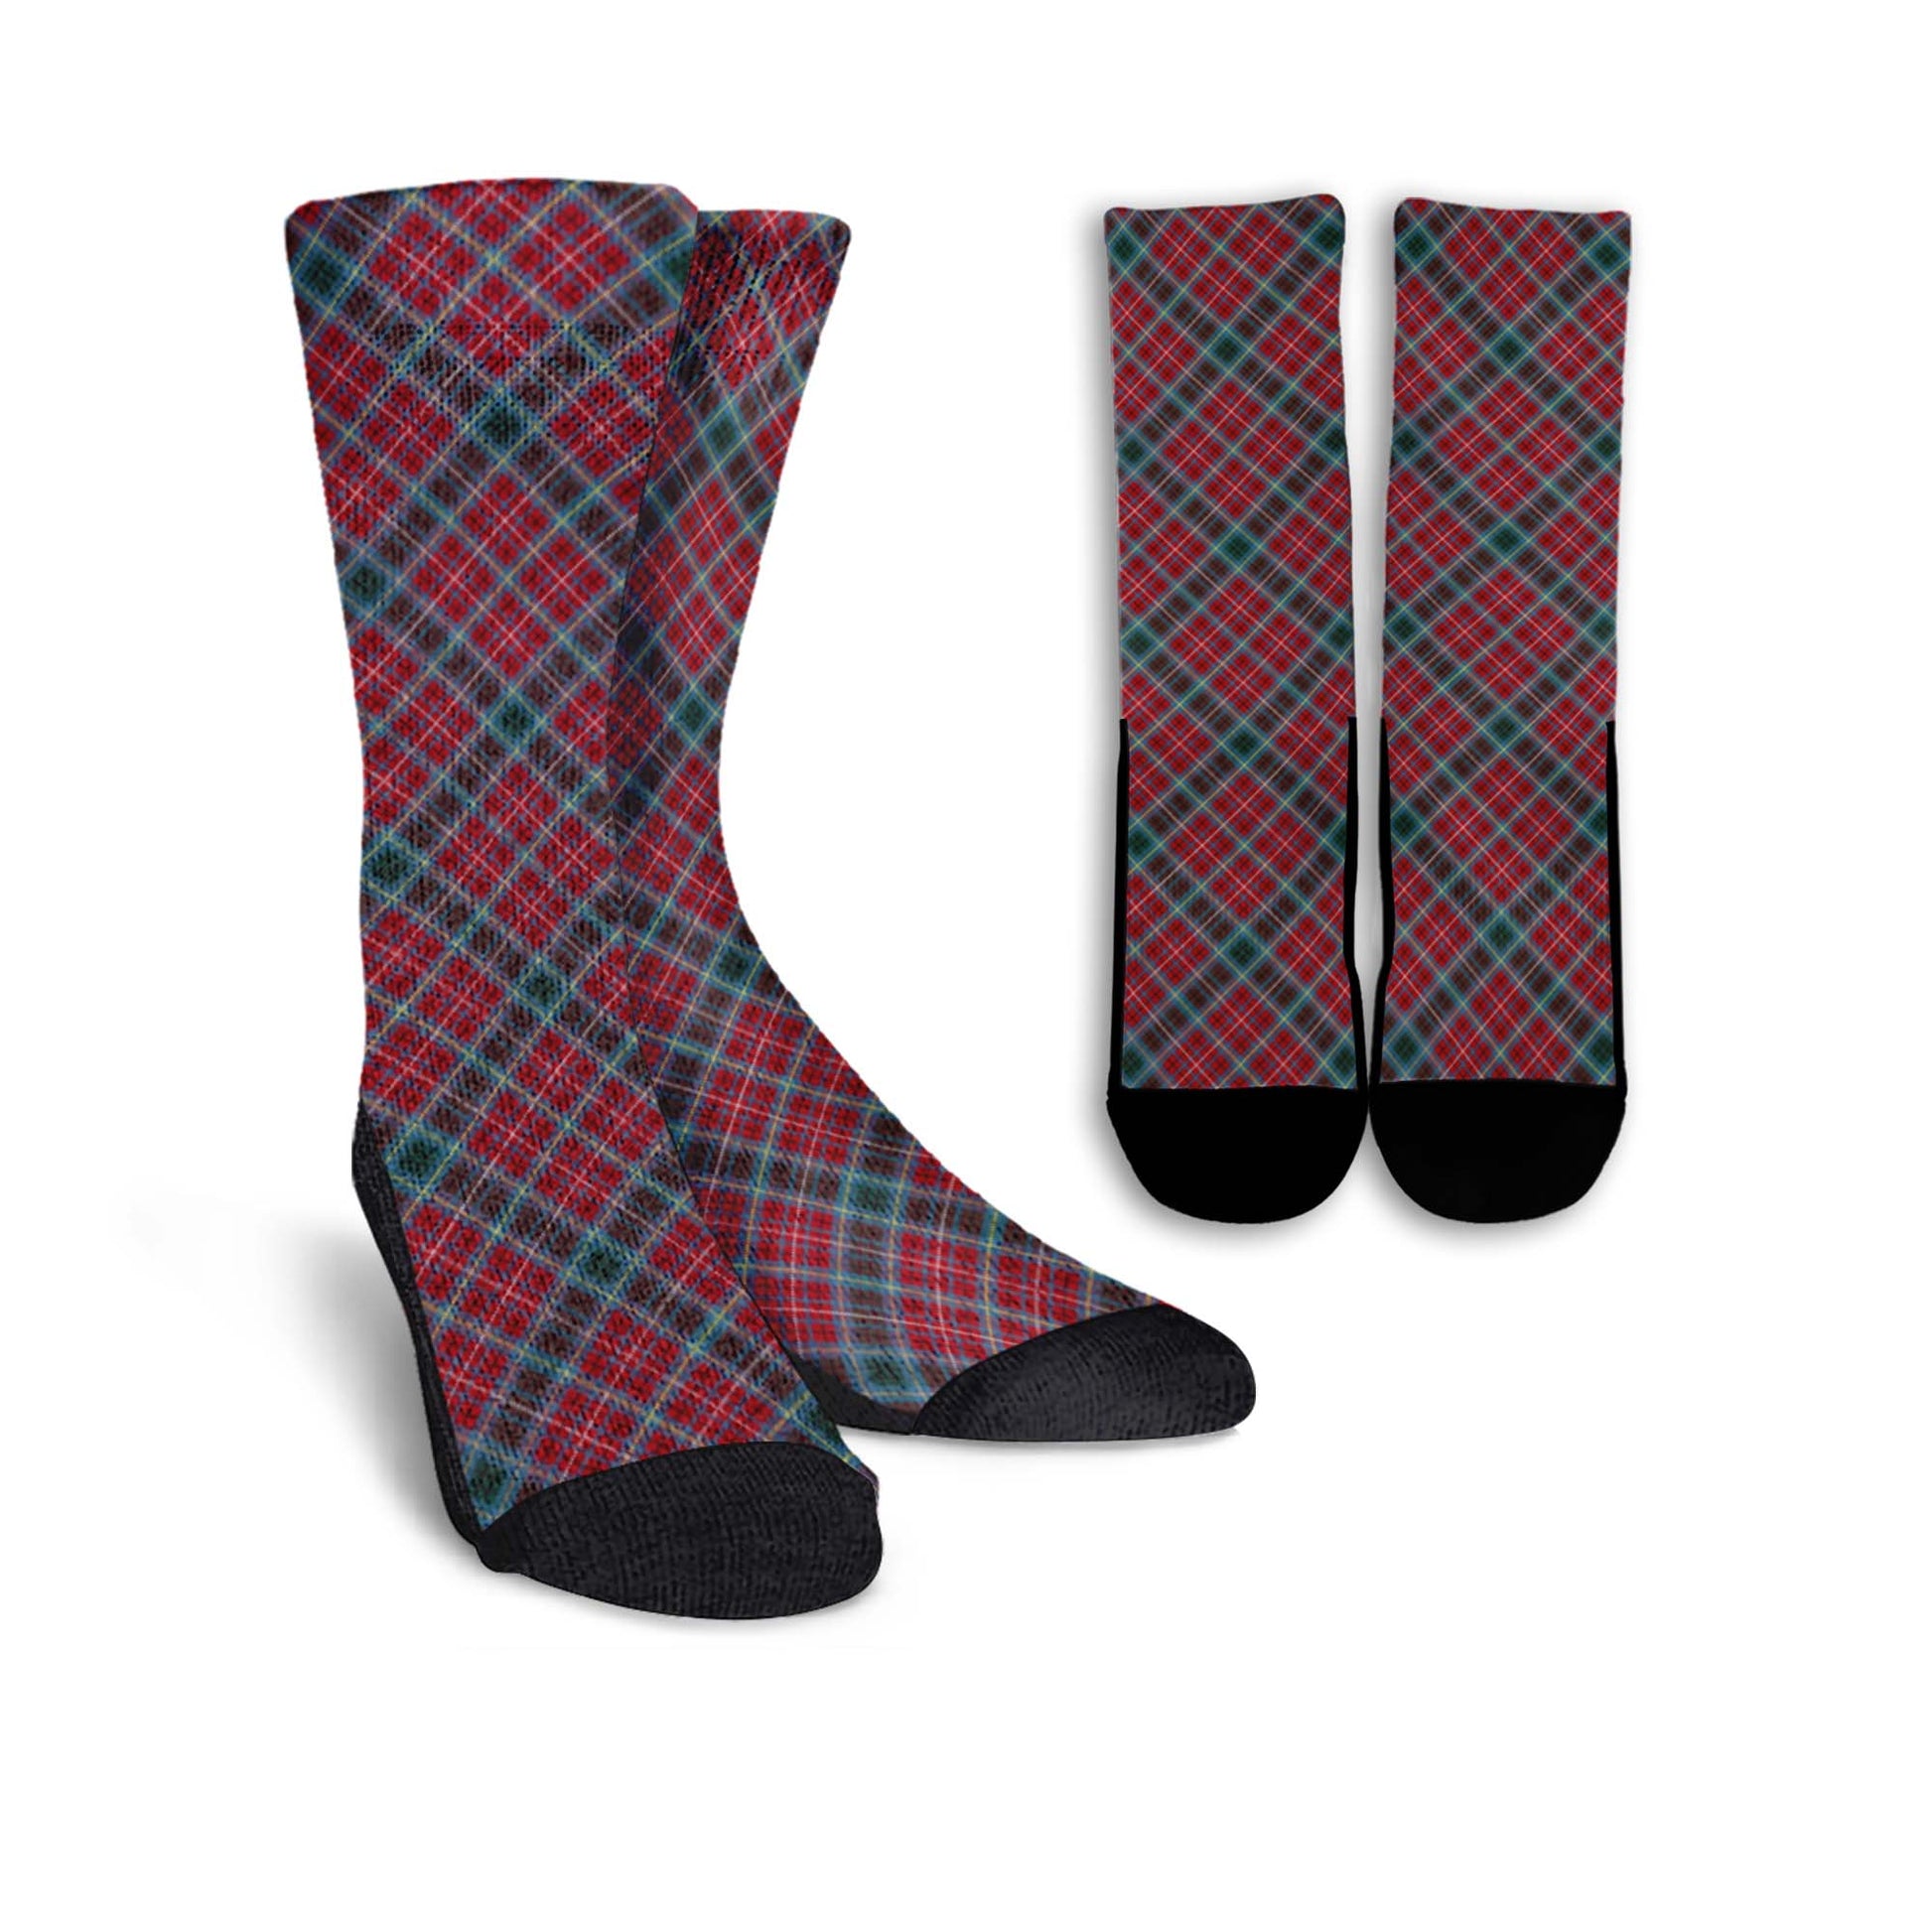 British Columbia Province Canada Tartan Crew Socks Cross Tartan Style - Tartanvibesclothing